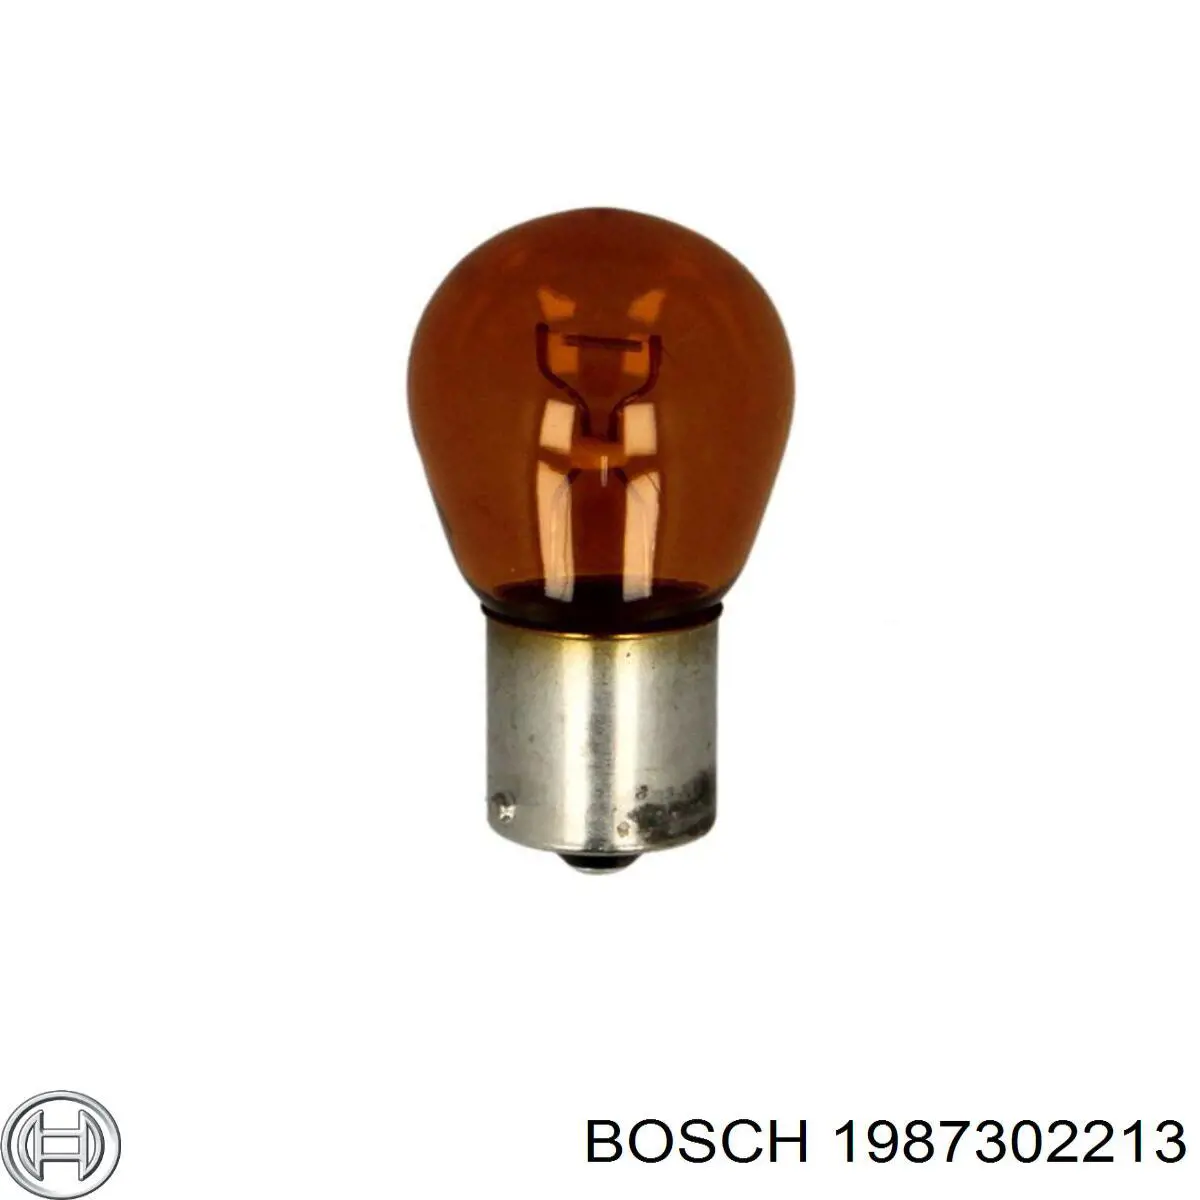 1 987 302 213 Bosch bombilla